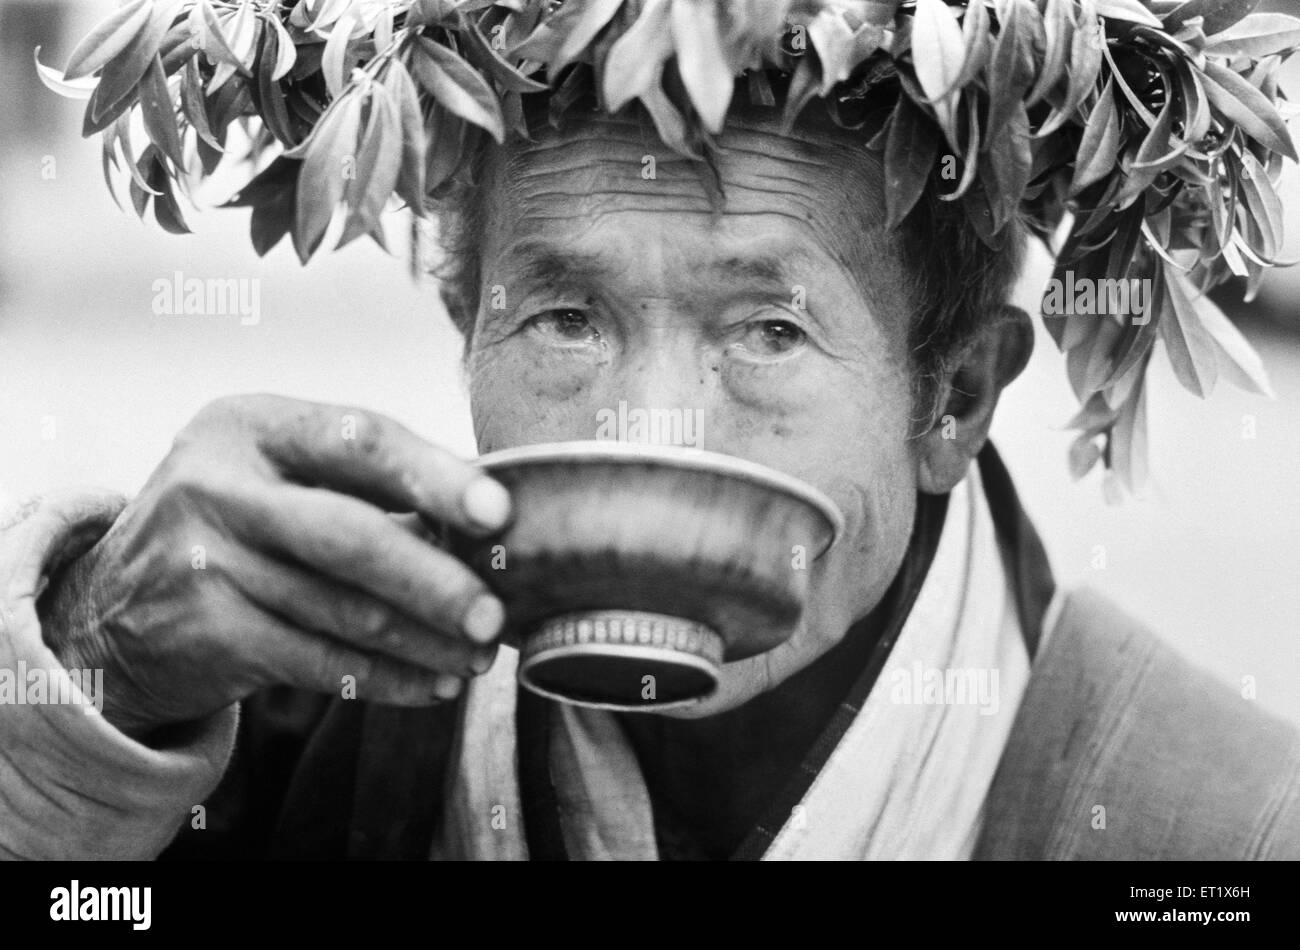 Bhutanese man drinks liquor out of an ornamental copper bowl ; Paro ; Bhutan Stock Photo